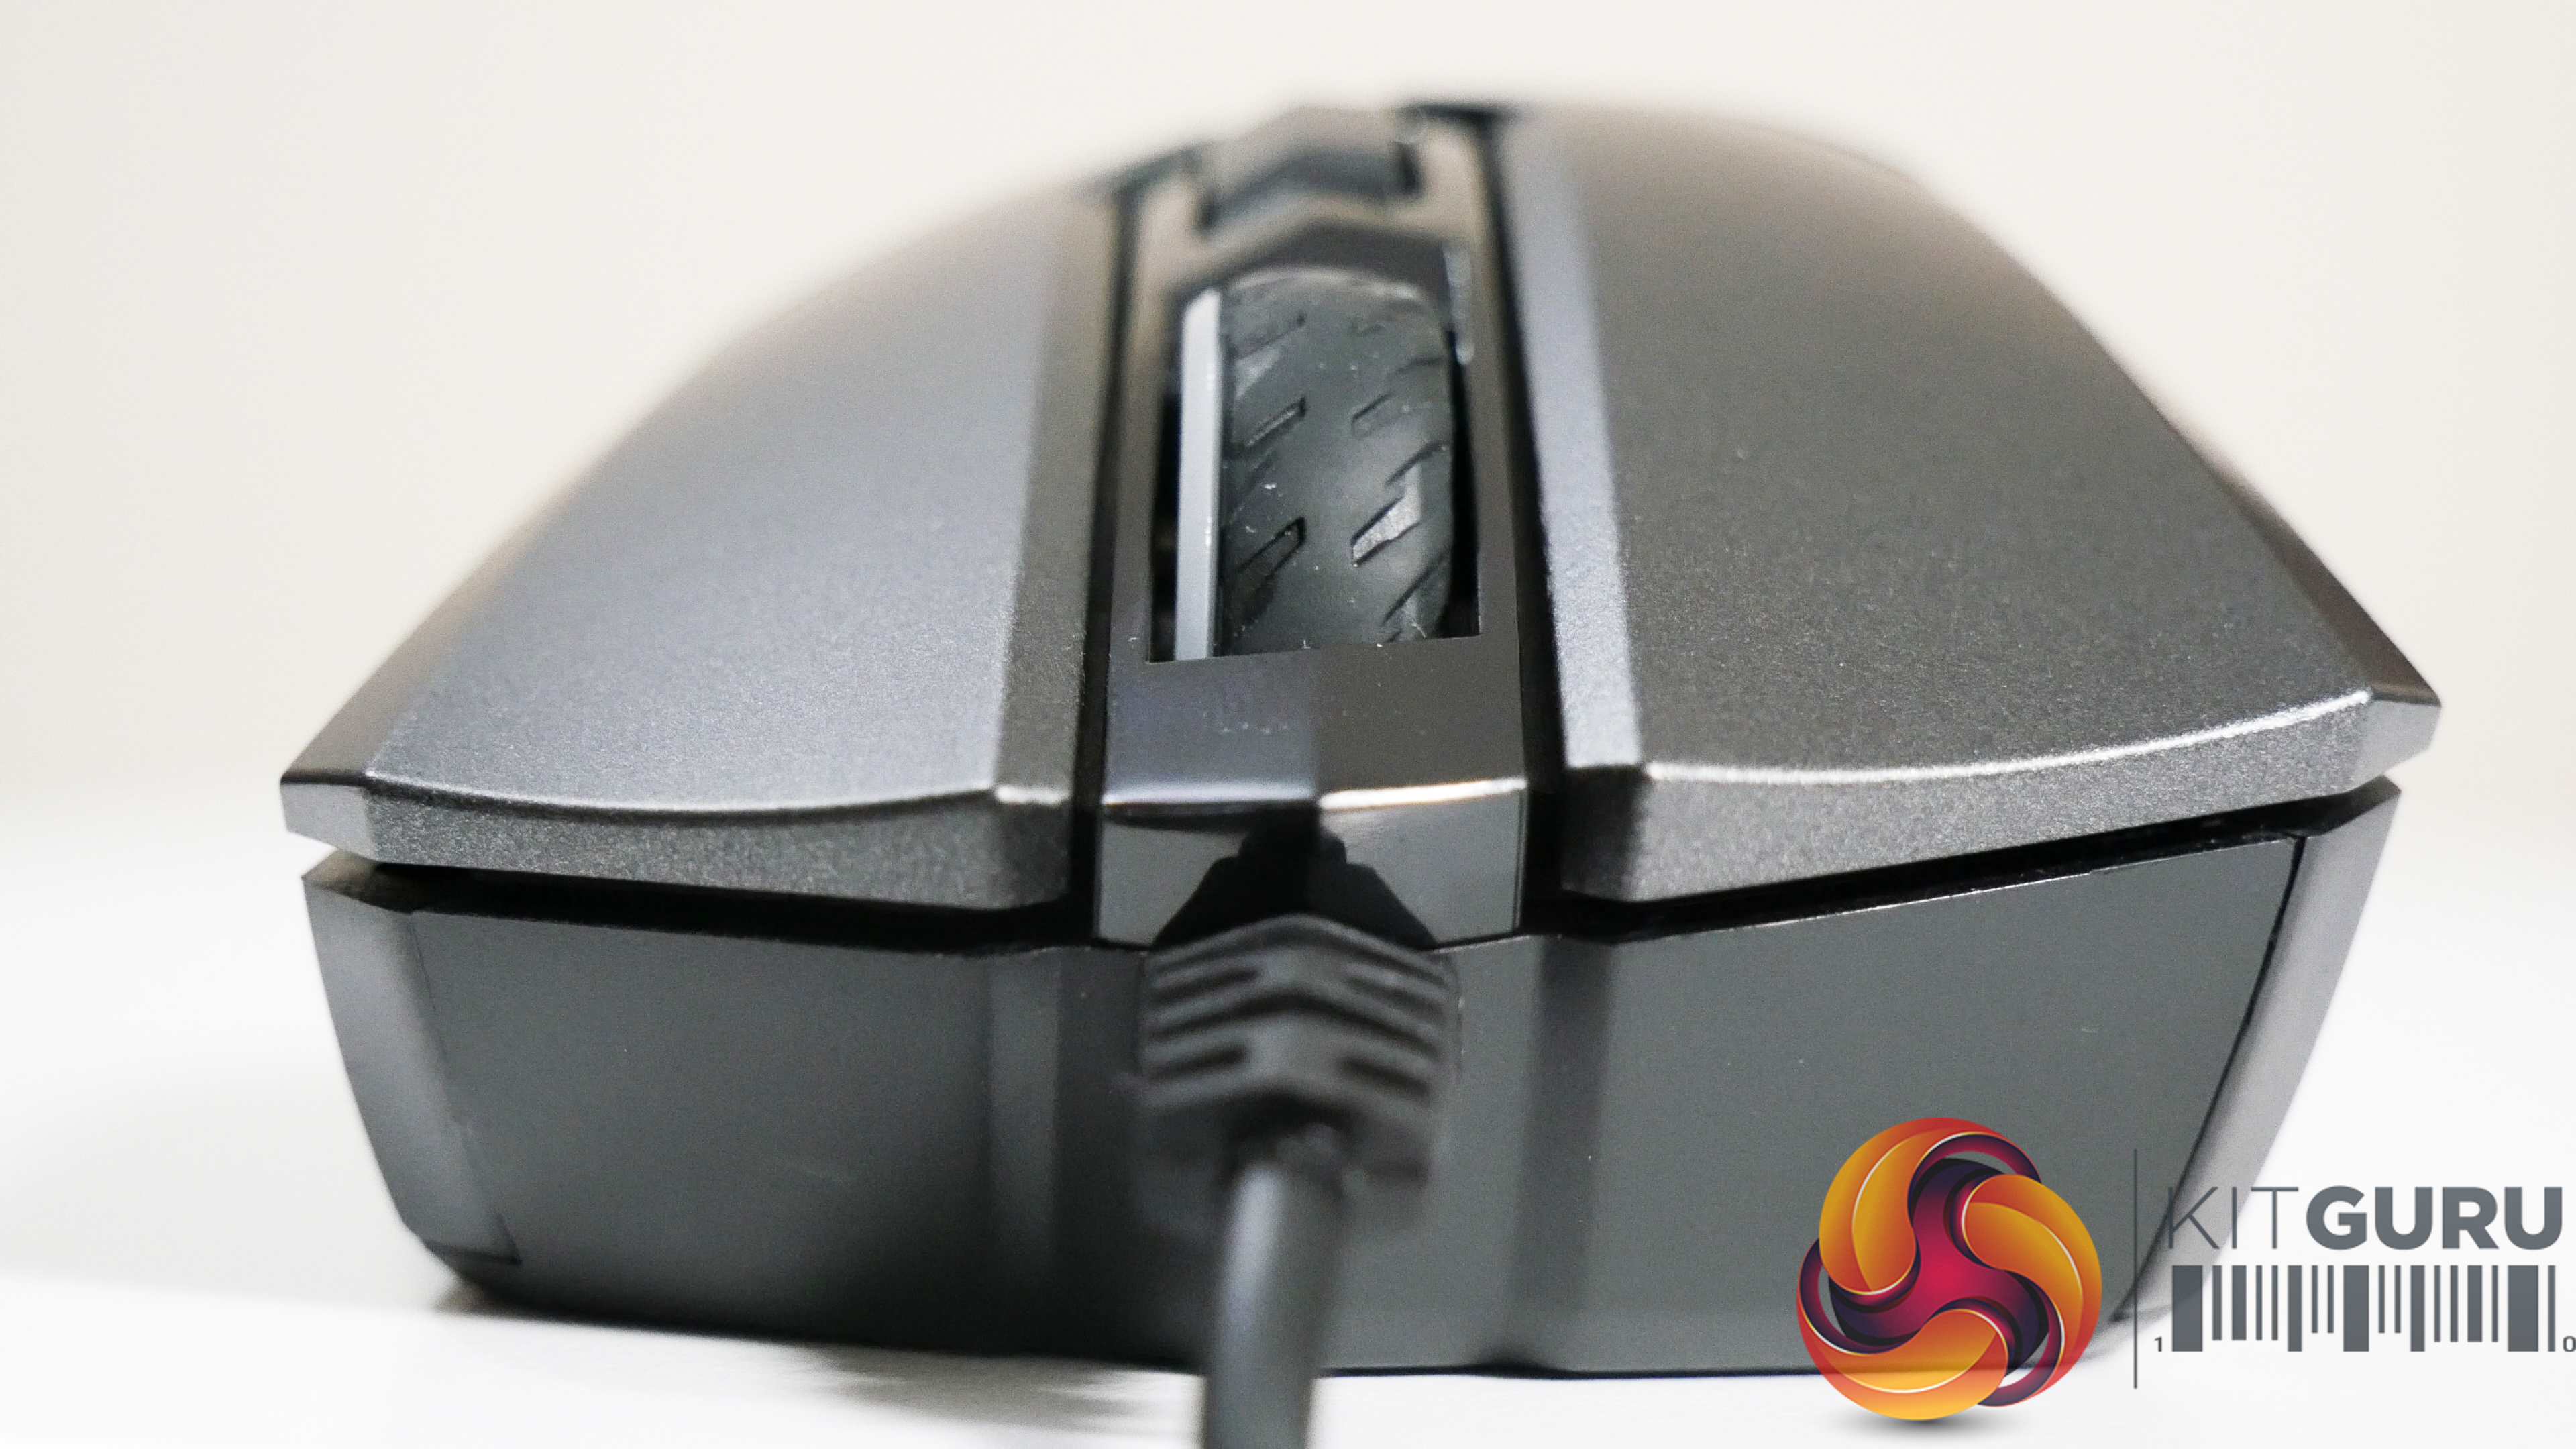 GM50 KitGuru | Clutch MSI Gaming Mouse Review